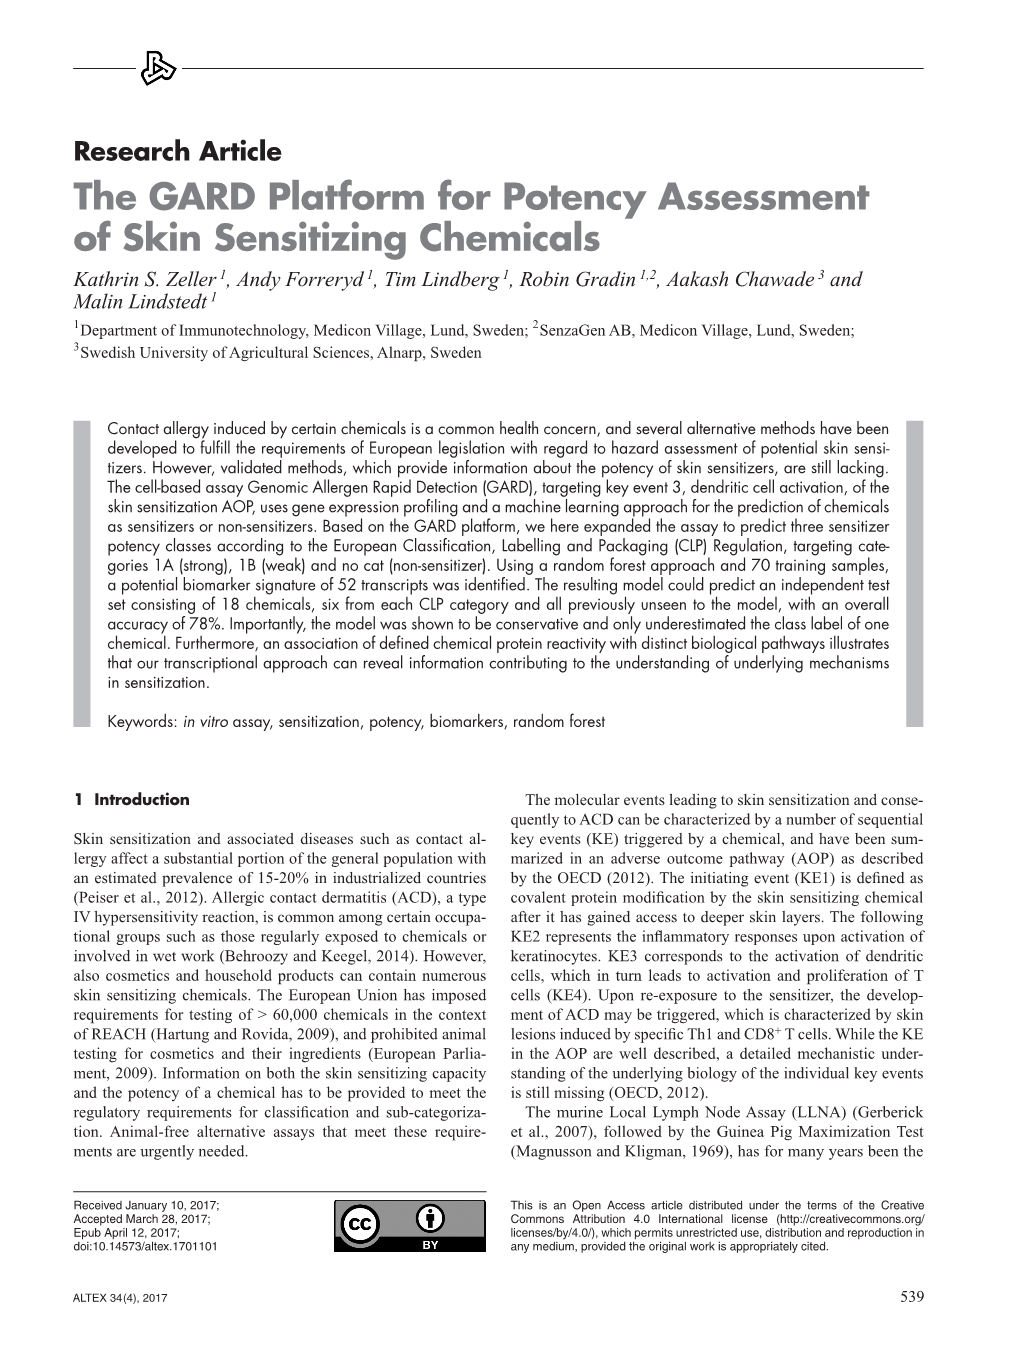 The GARD Platform for Potency Assessment of Skin Sensitizing Chemicals Kathrin S